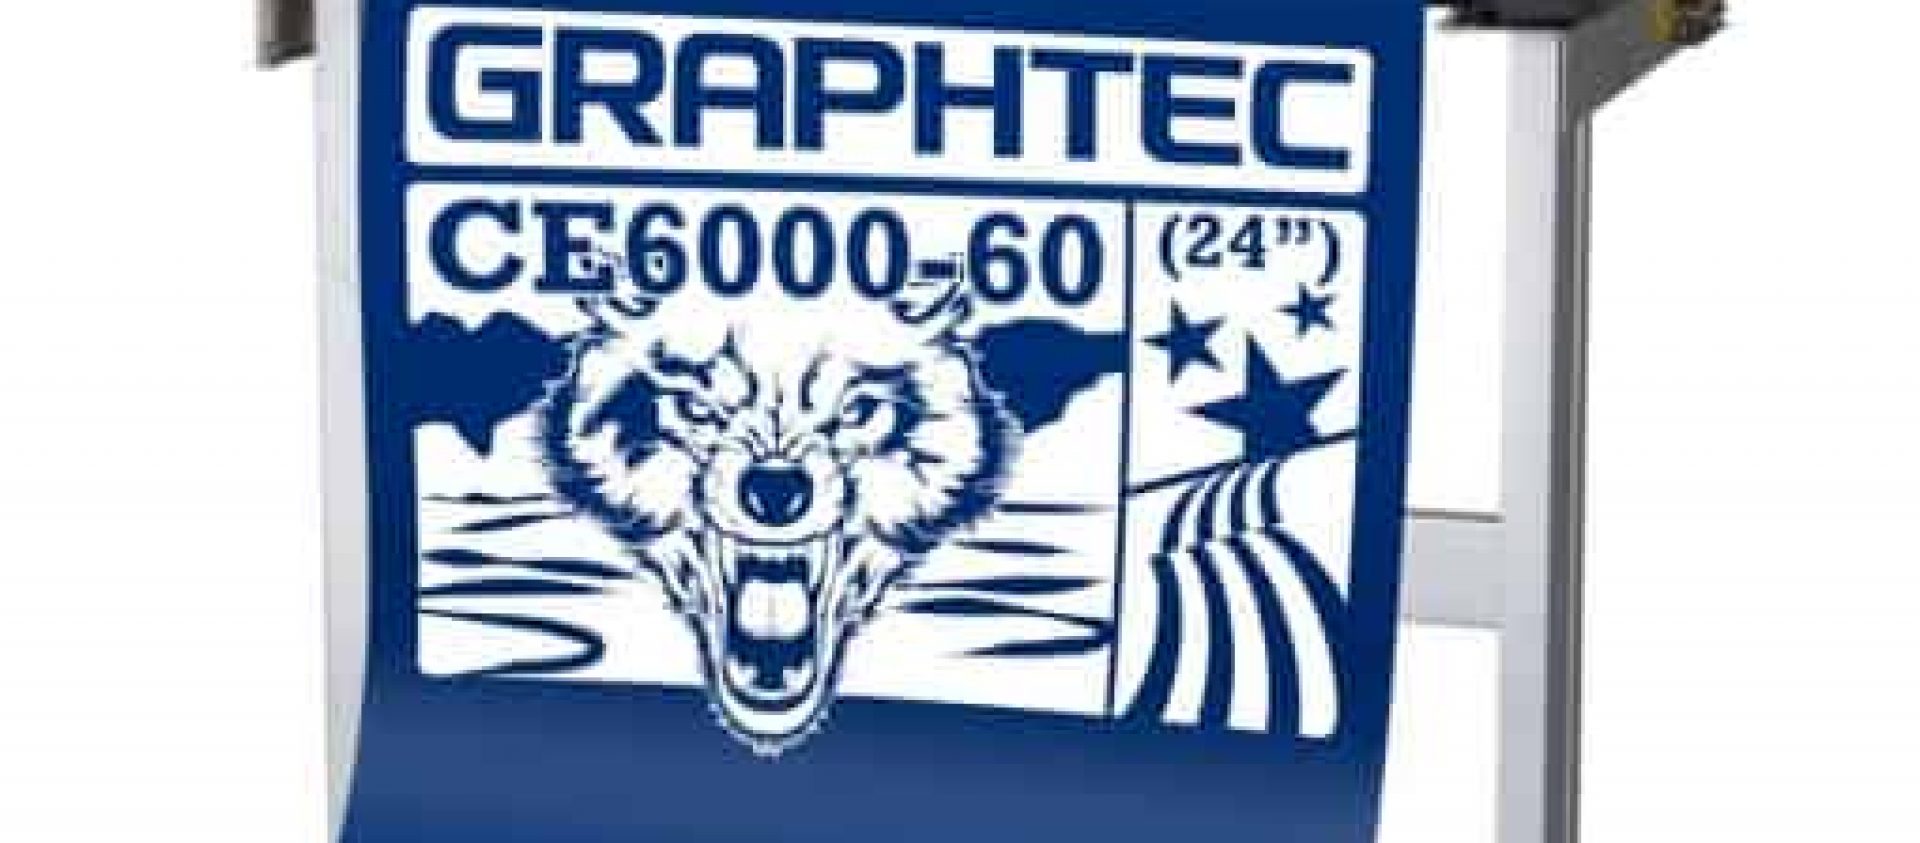 graphtec-ce60000-60-vinyl-cutter_510x555